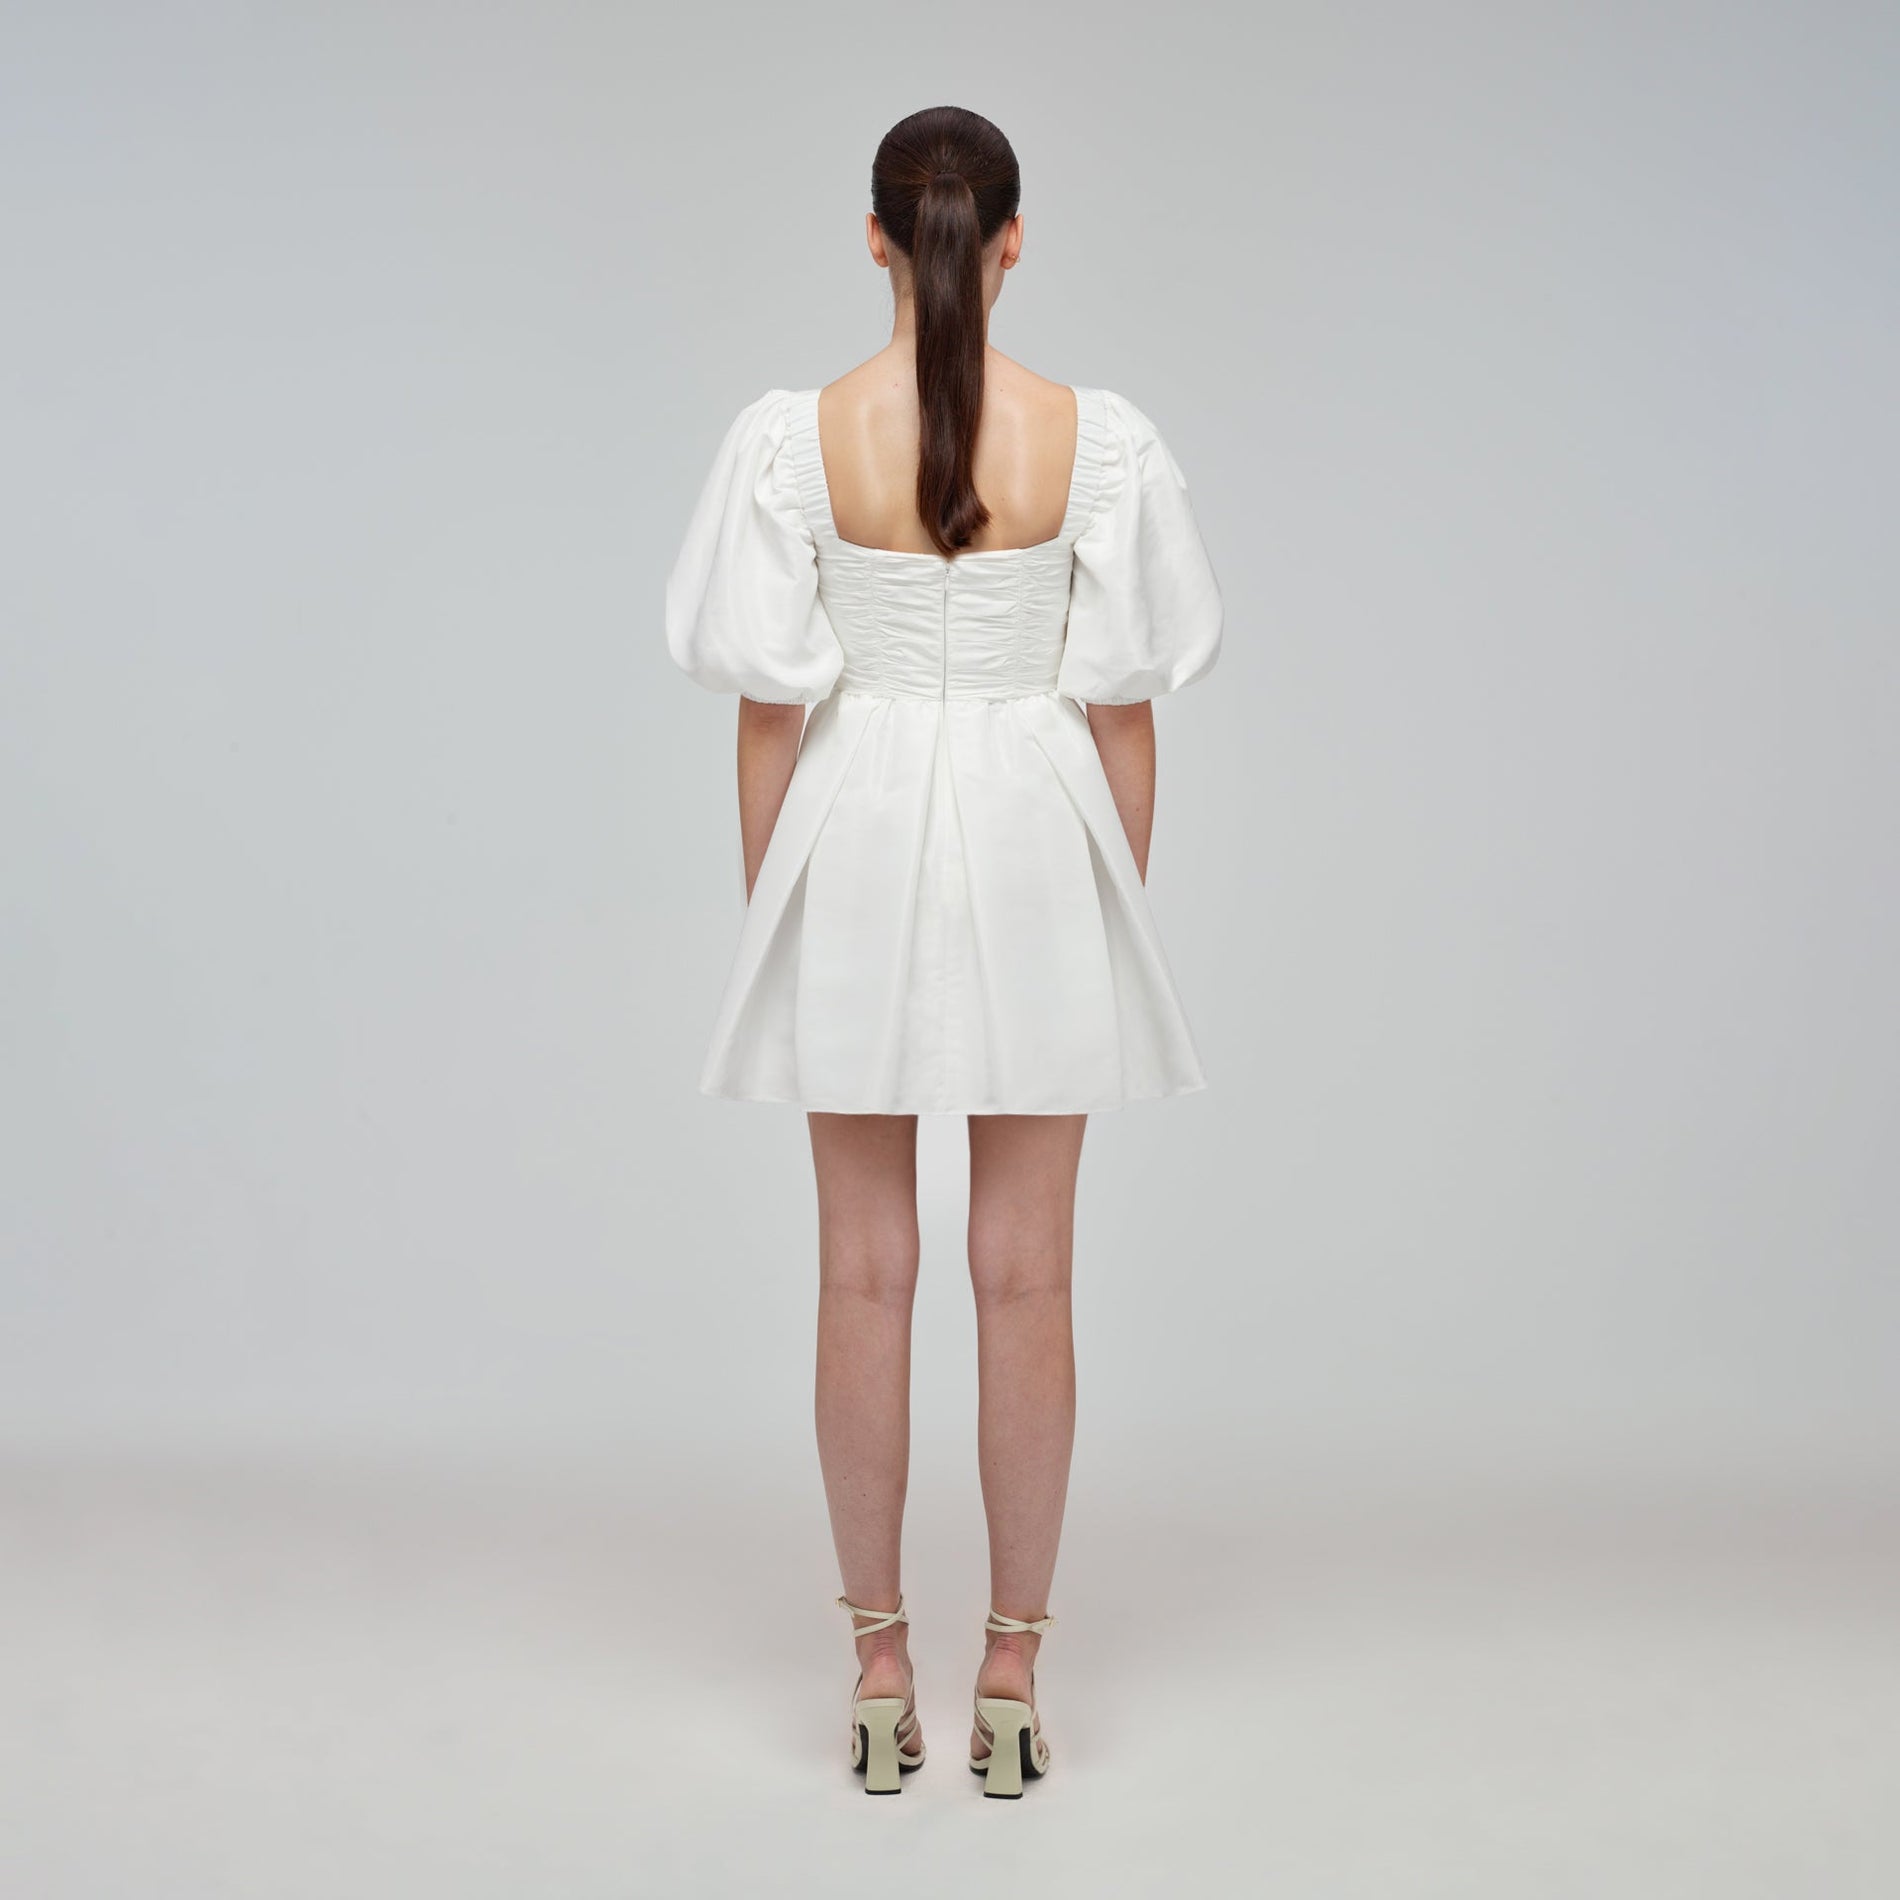 A woman wearing the White Taffeta Puff Sleeve Mini Dress